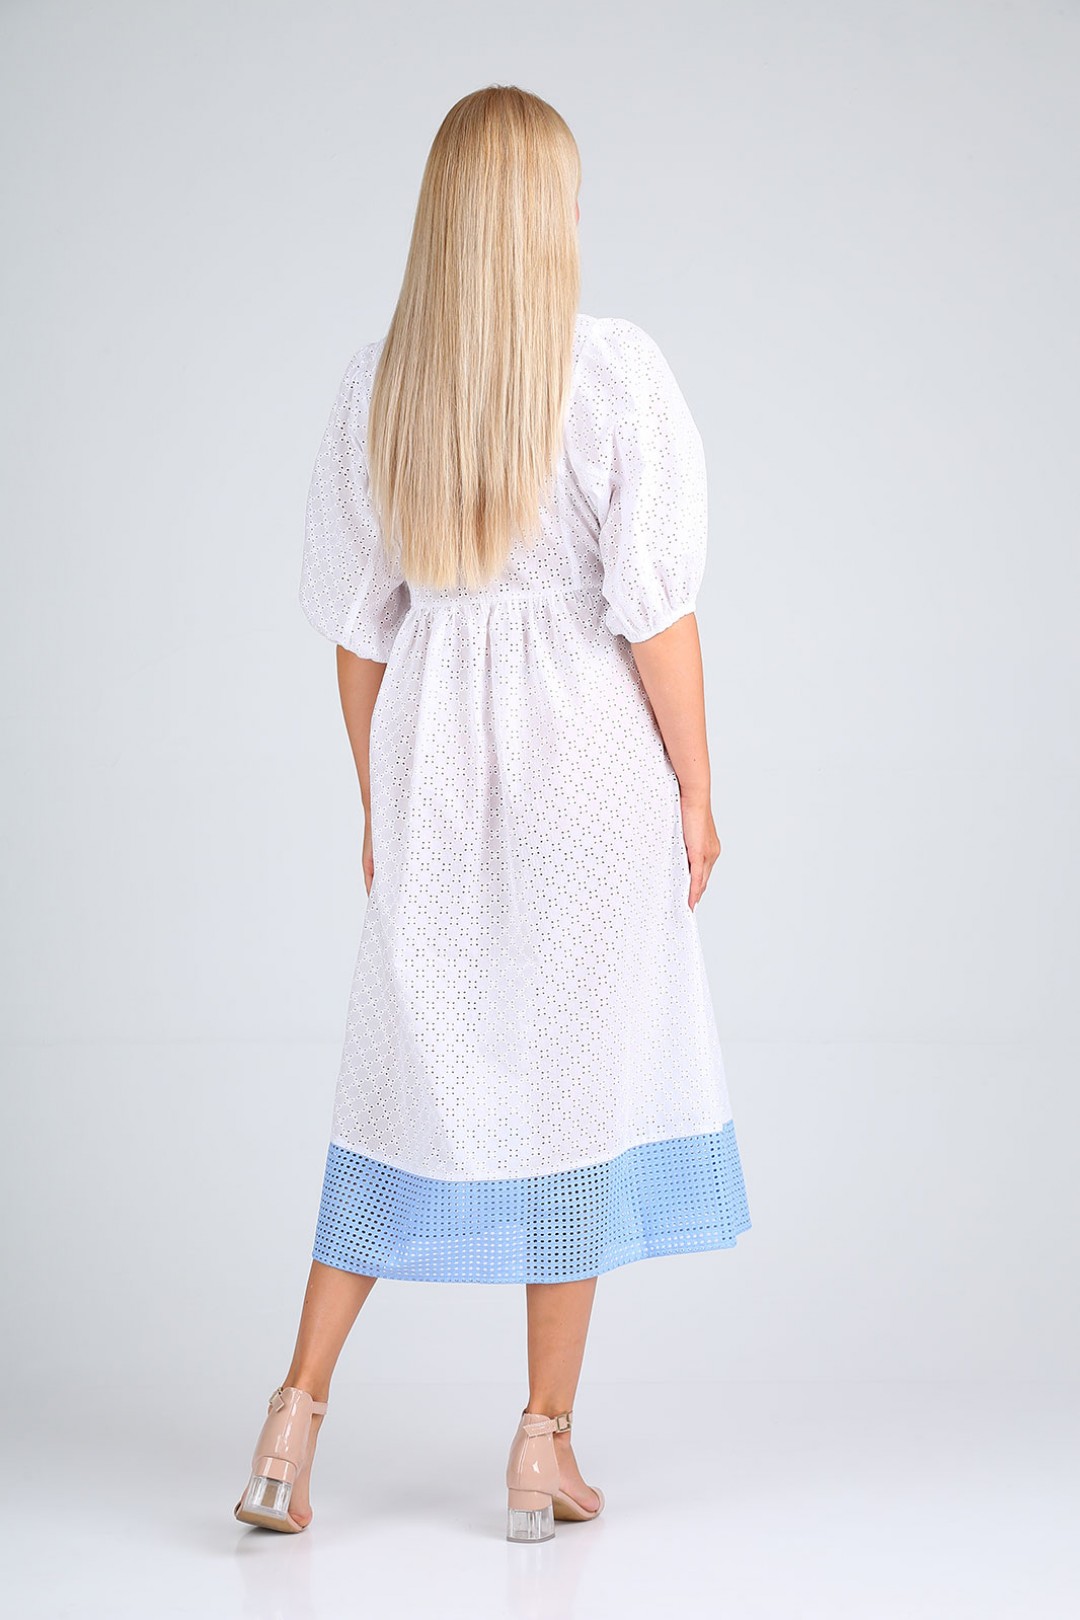 Платье FloVia 4090 бело-голубой